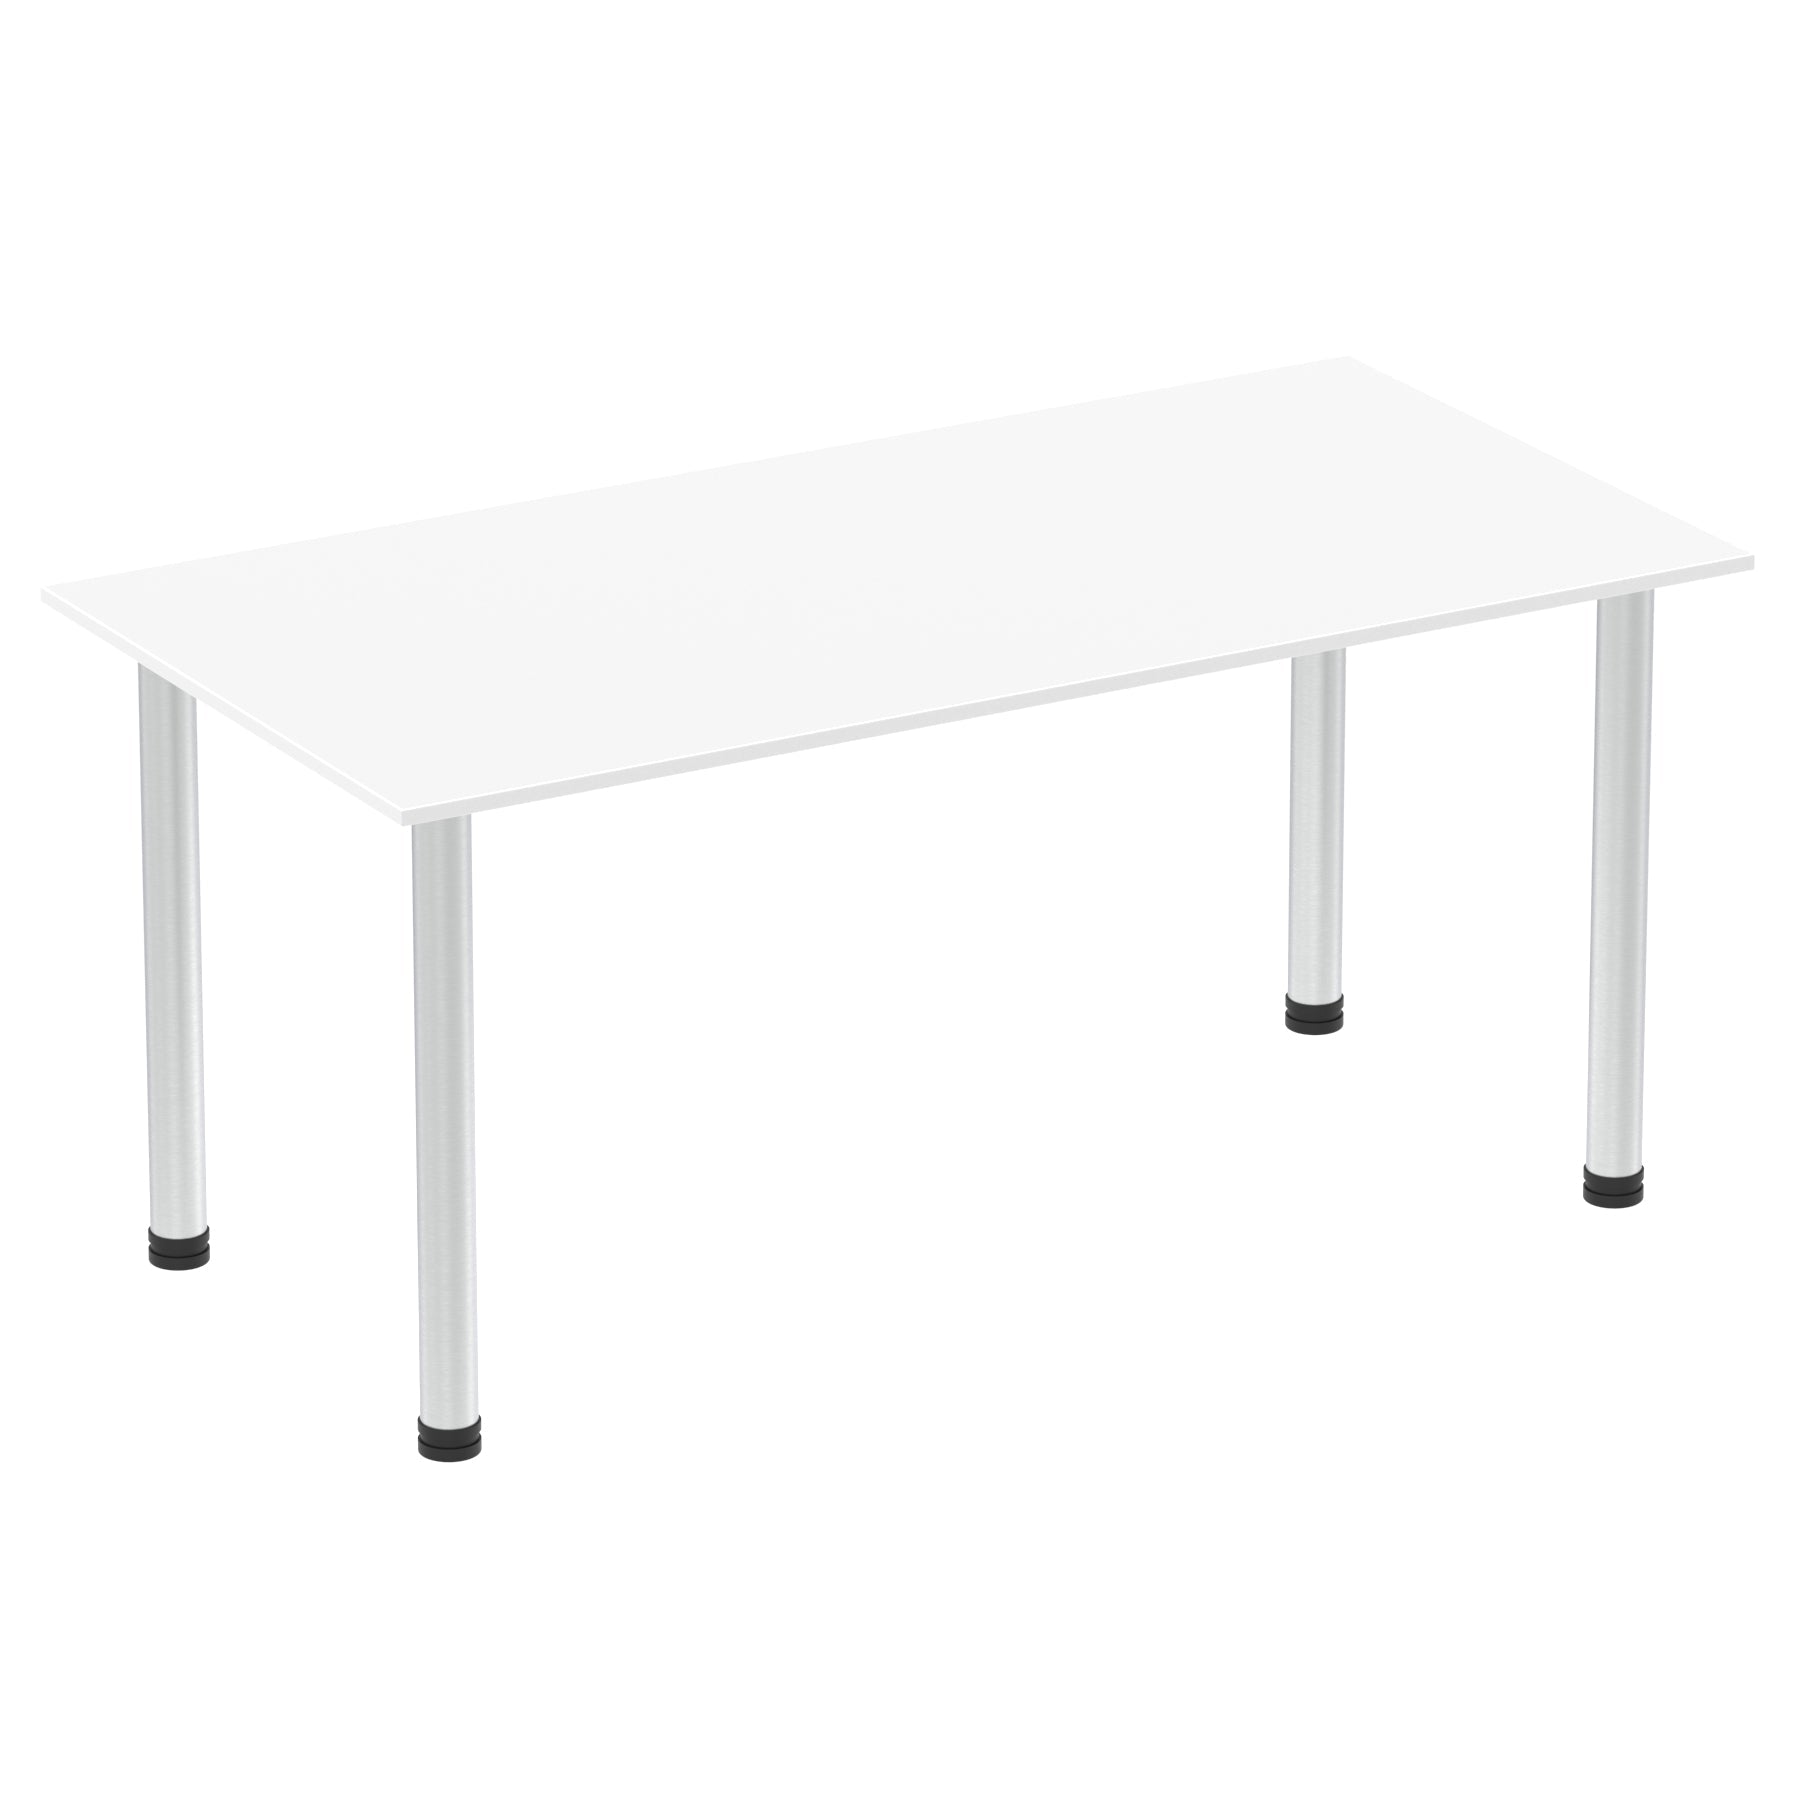 Impulse 1600mm Straight Post Leg Table - Rectangular MFC Desk, Self-Assembly, 5-Year Guarantee, Multiple Frame Colors